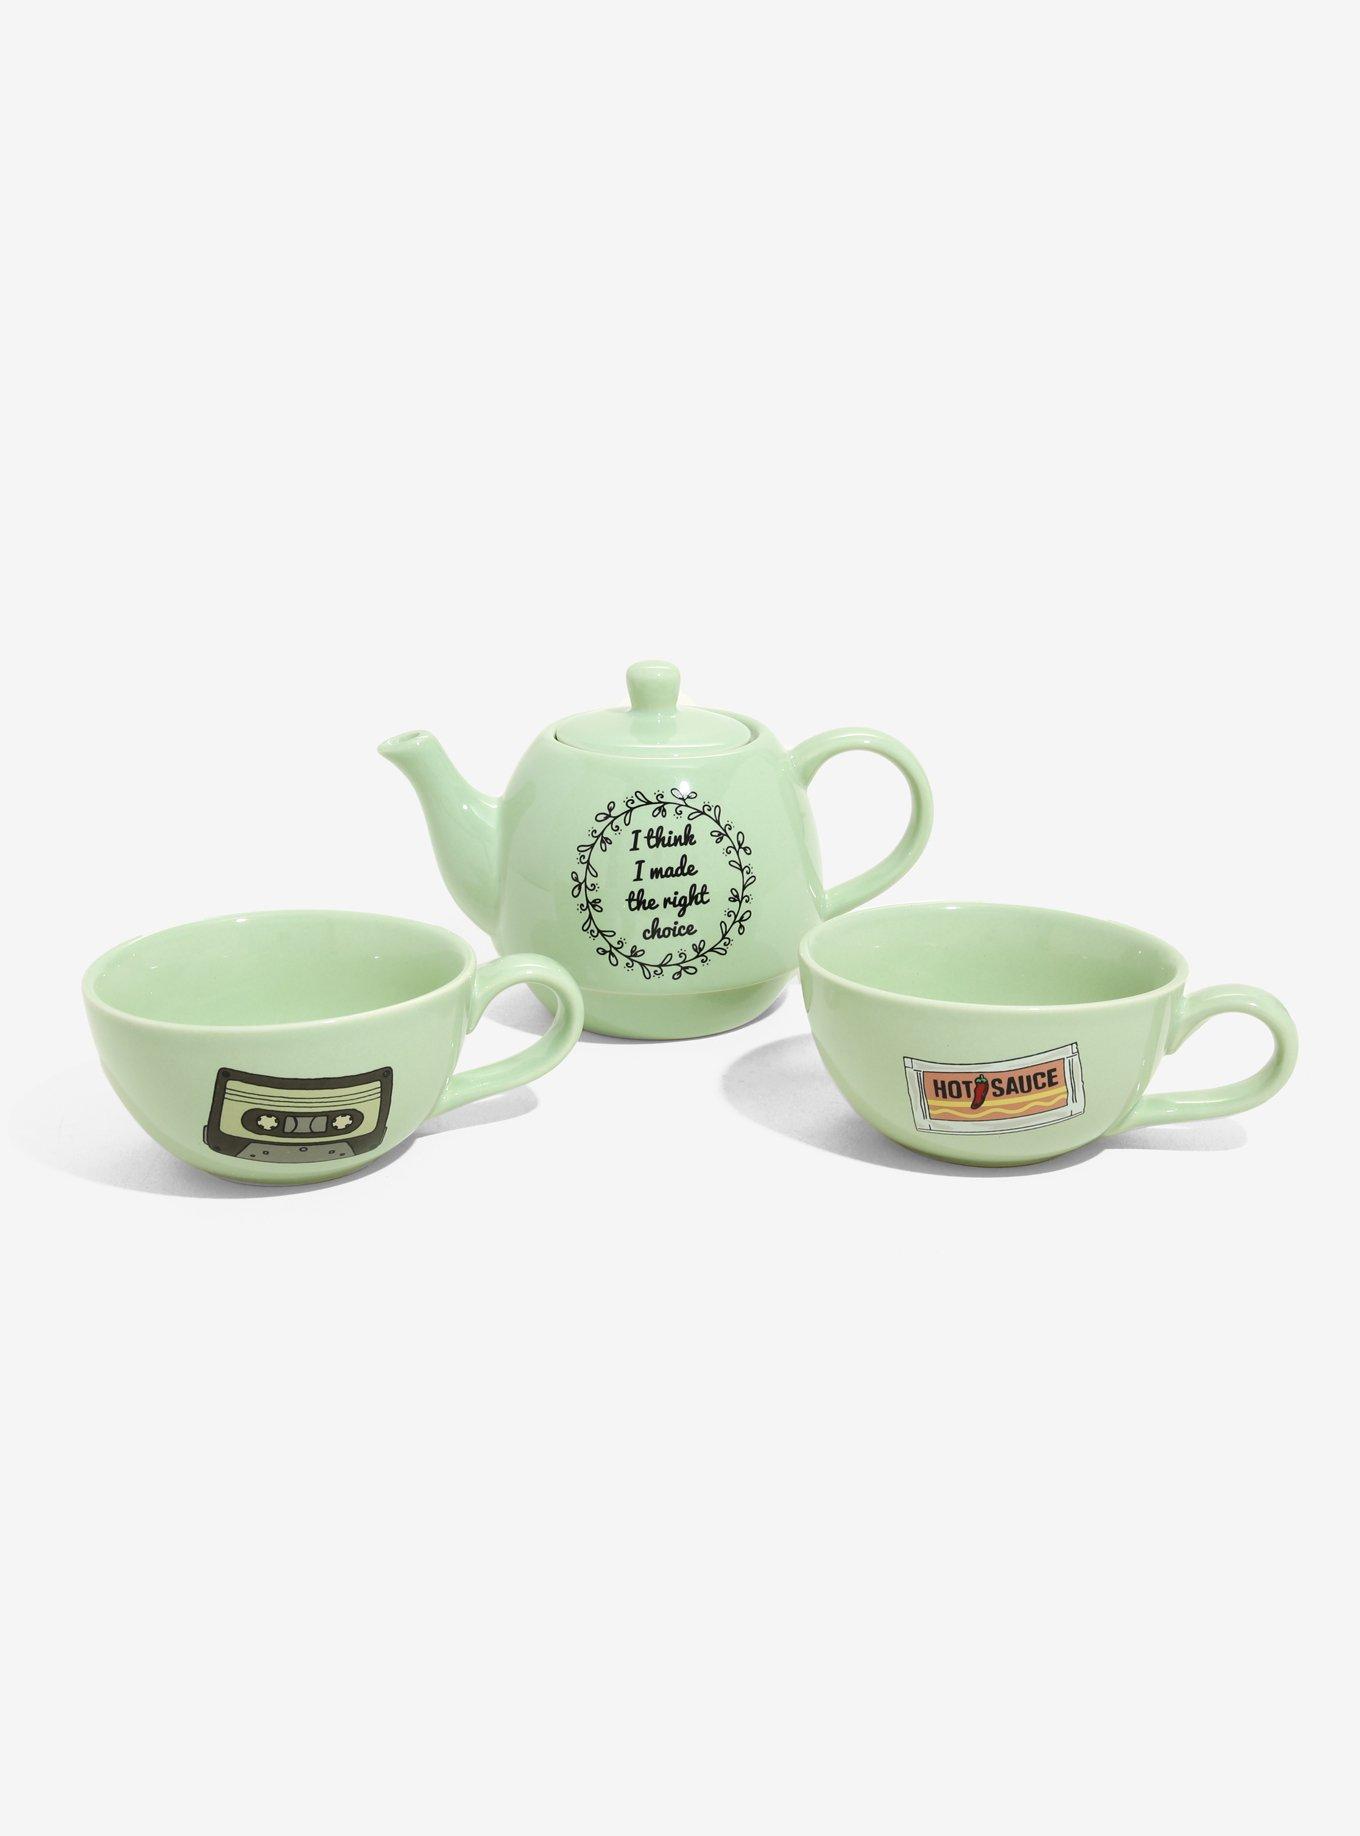 Anime Sanrio Hello Kitty Ceramic Teacup Teapot Saucer Creative